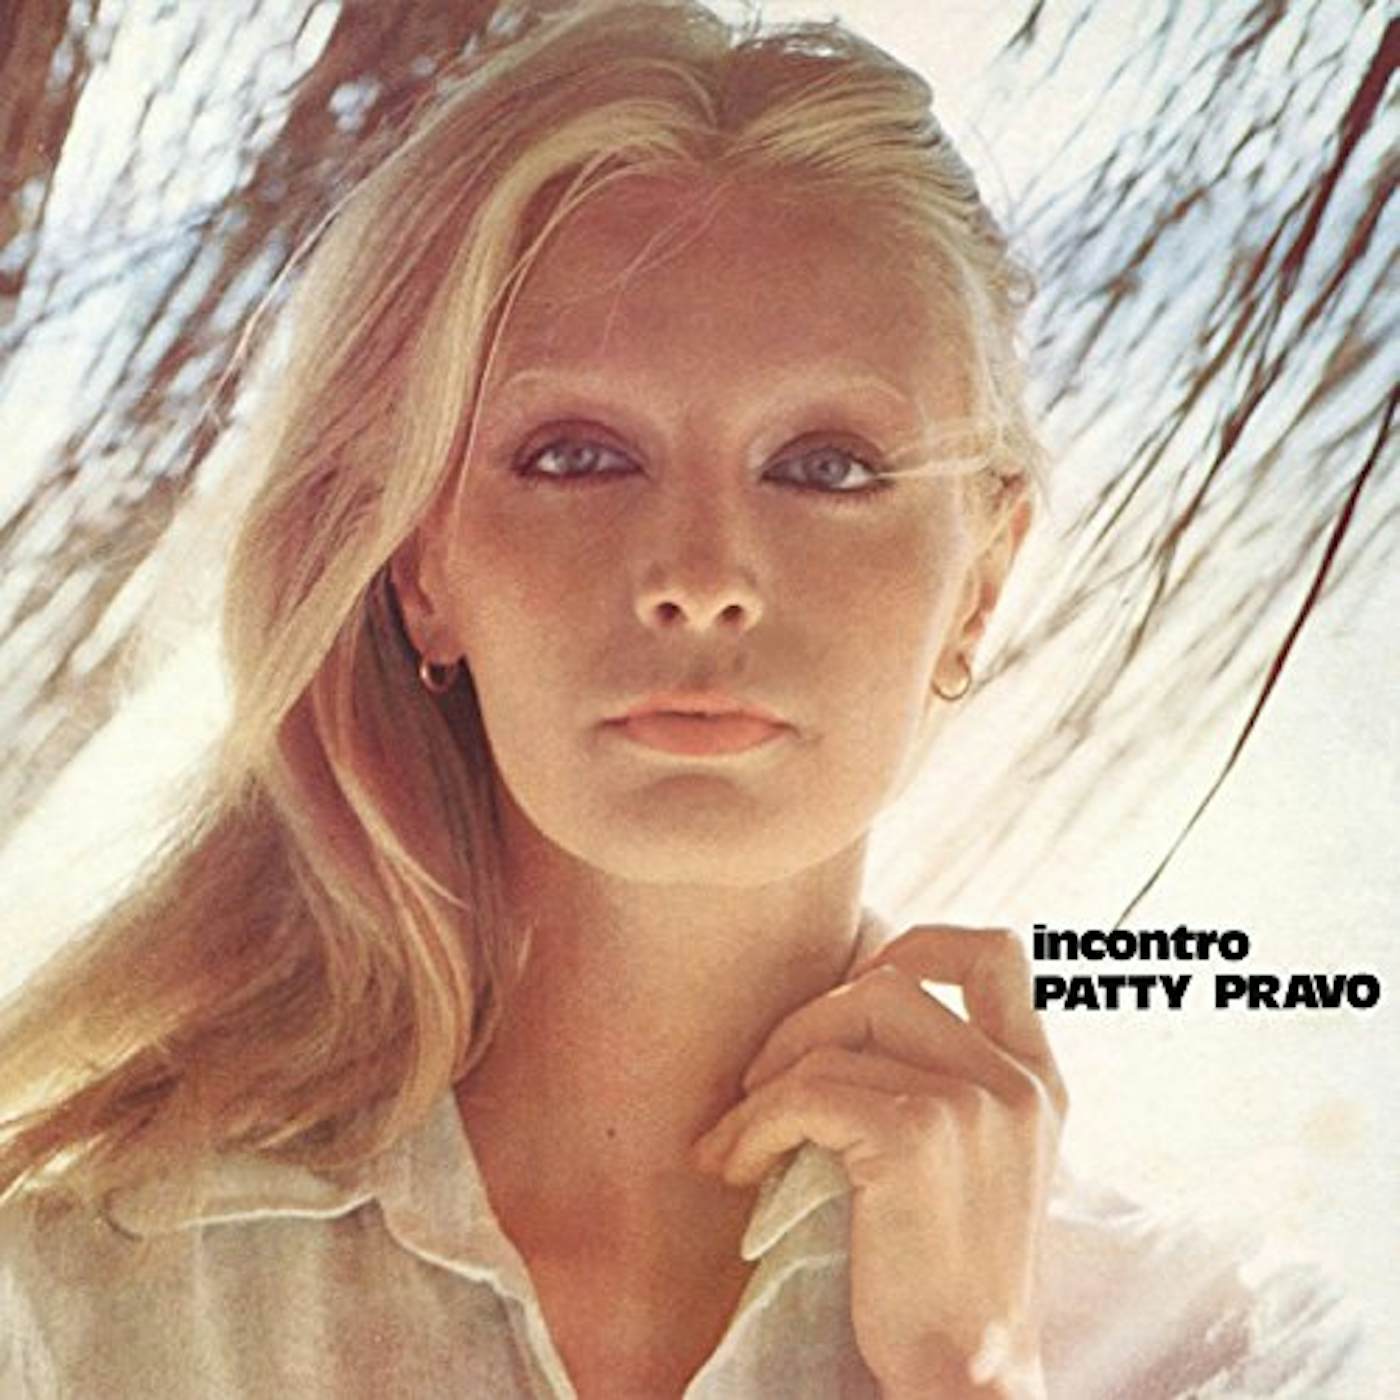 Patty Pravo Incontro Vinyl Record